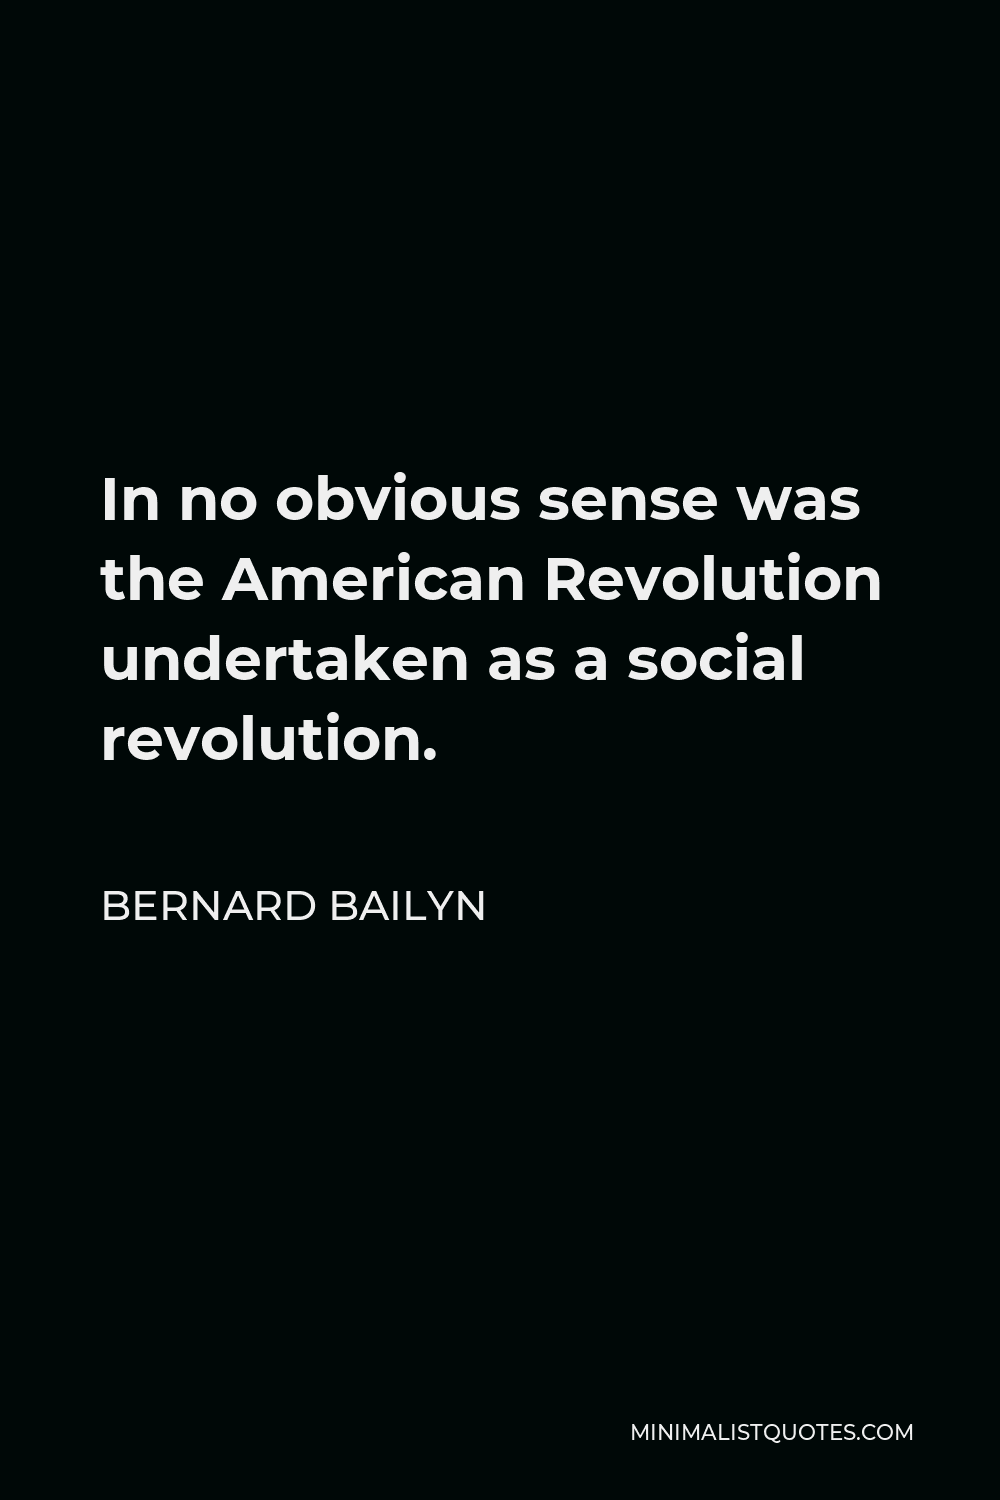 Bernard Bailyn Quote - In no obvious sense was the American Revolution undertaken as a social revolution.